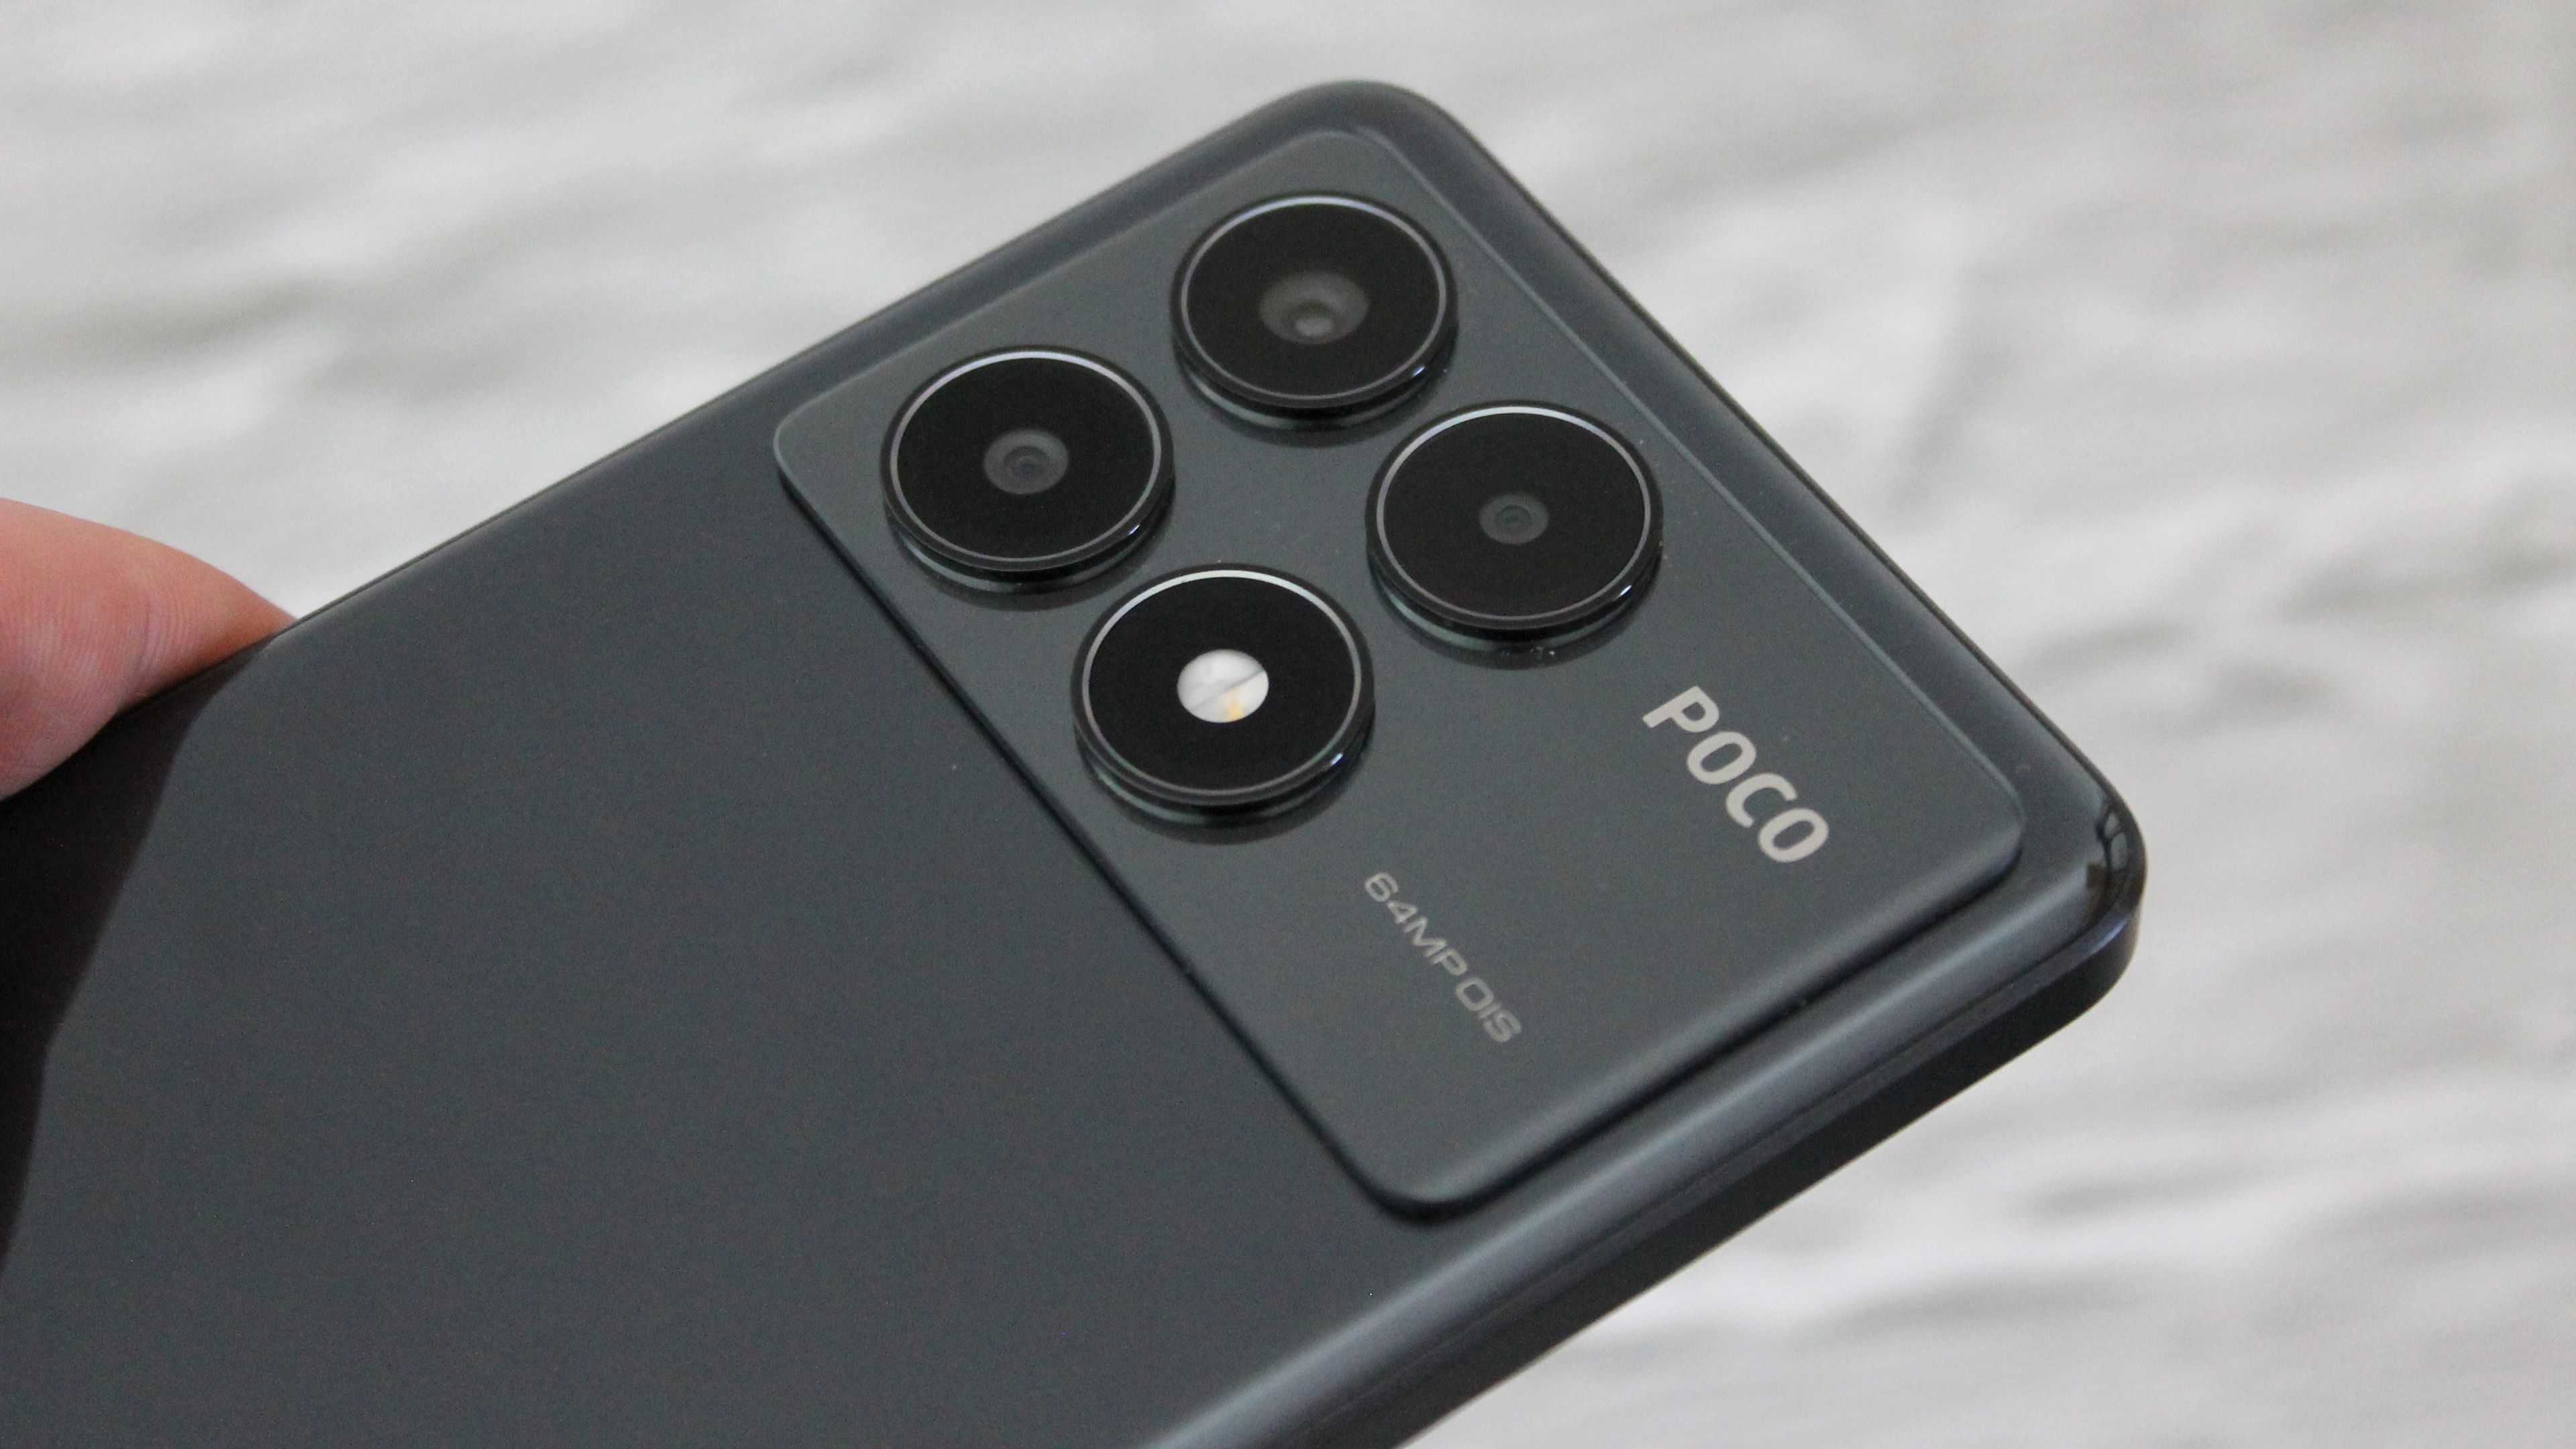 POCO X6 Pro: Reseña completa de un celular de vanguardia